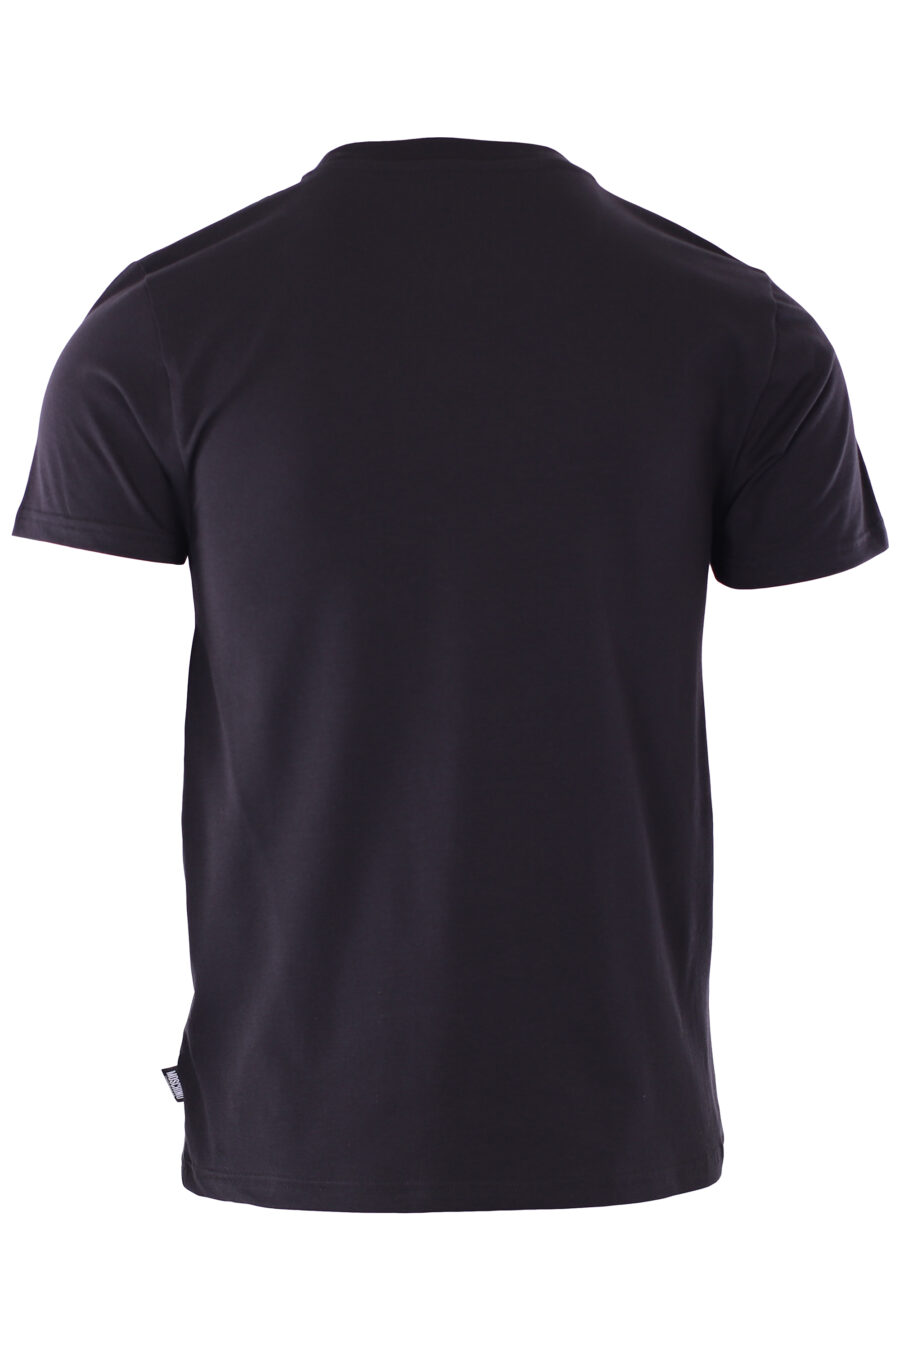 Camiseta negra "slim fit" con minilogo oso "underbear" - IMG 6589